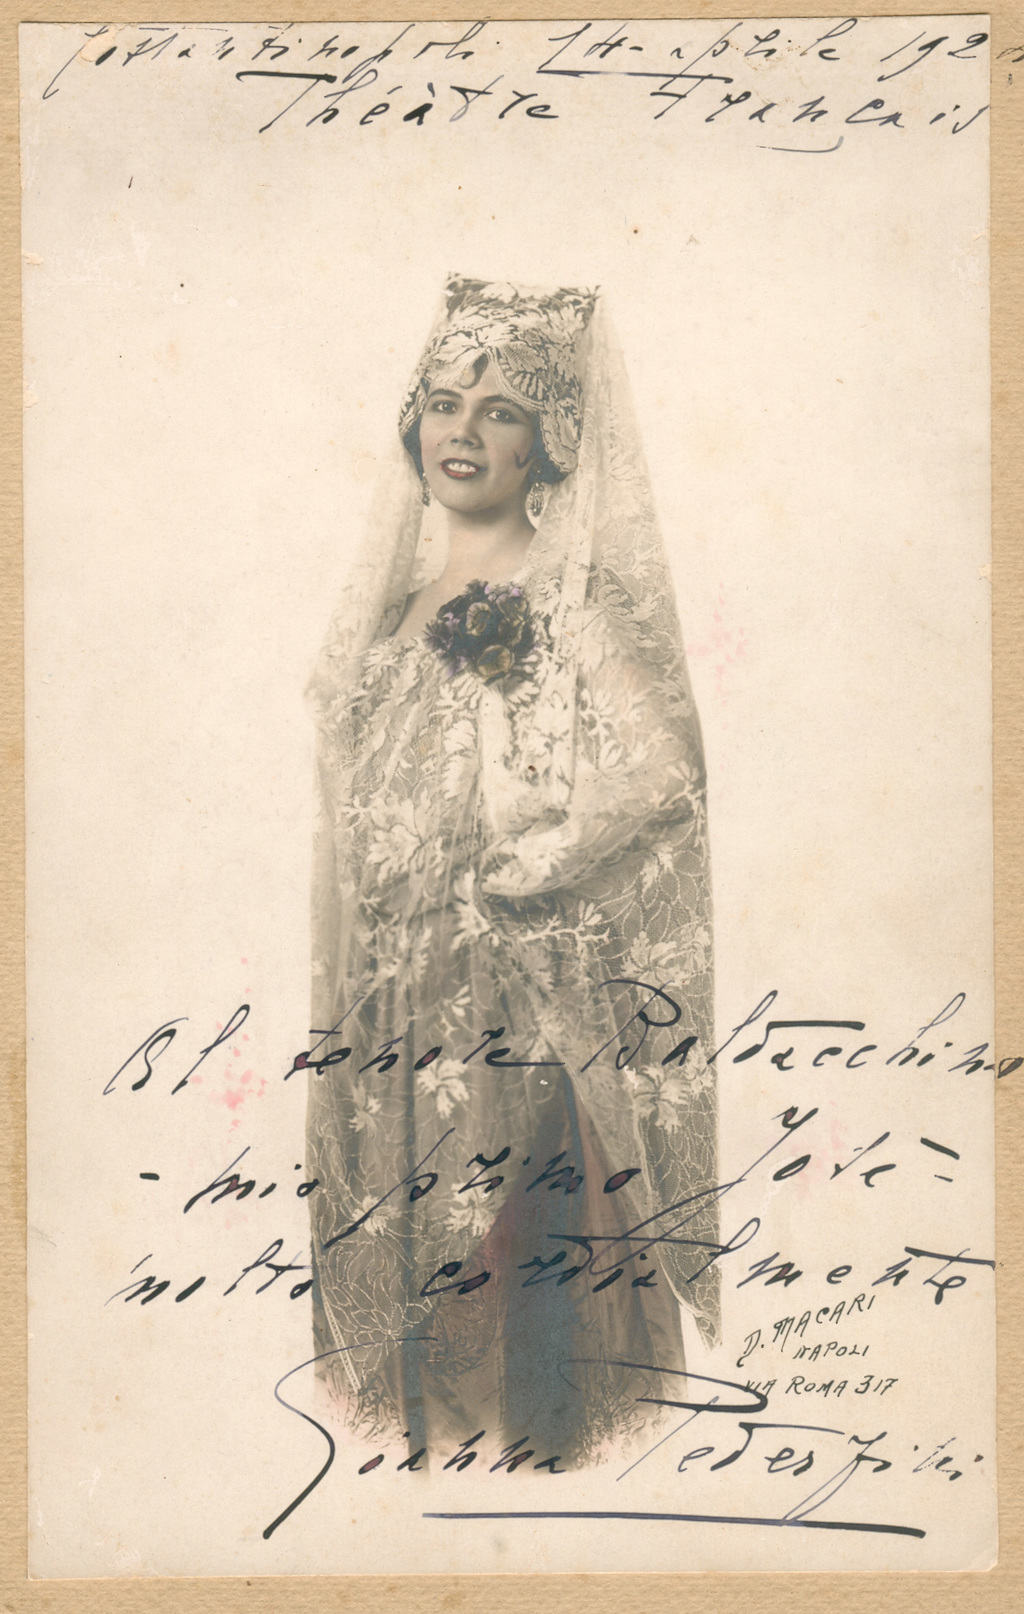 Pederzini's debut as Carmen in 1924 Turkey